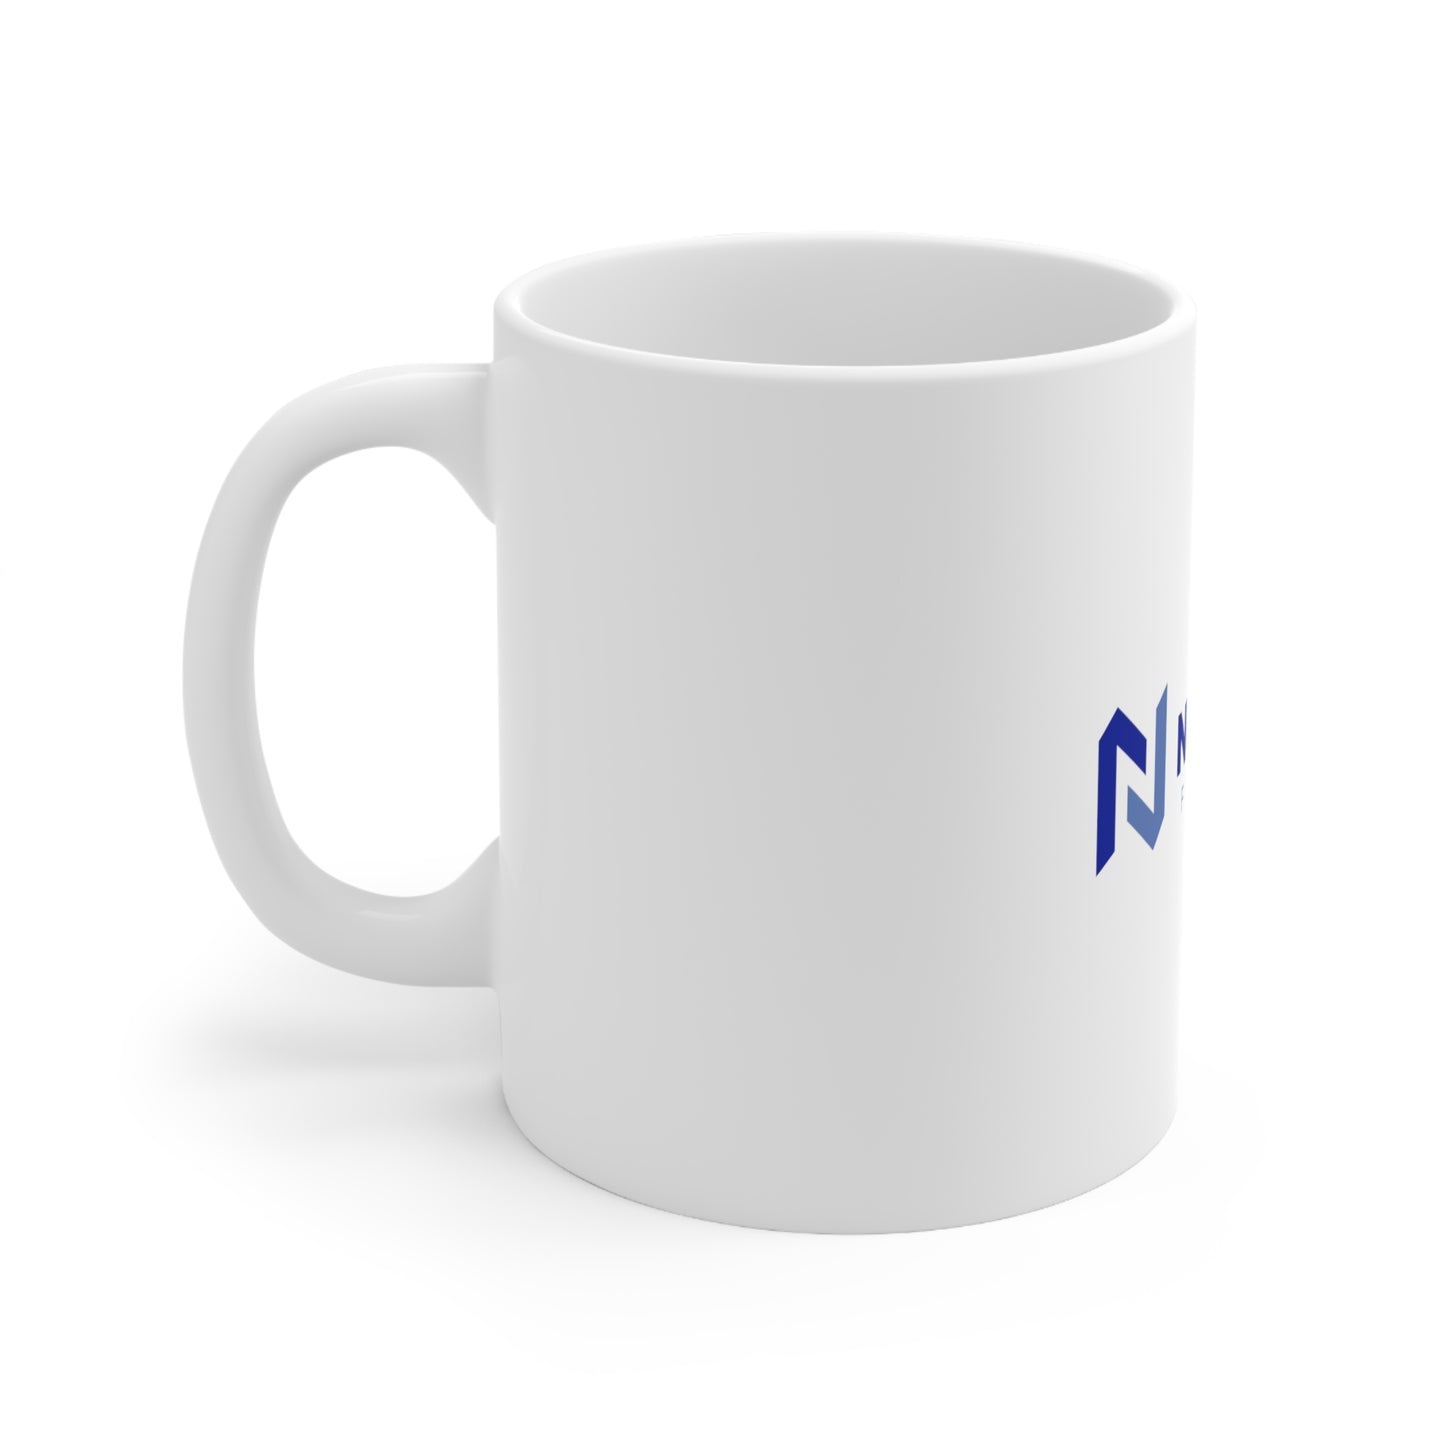 Nclusive Ceramic Mug 11oz